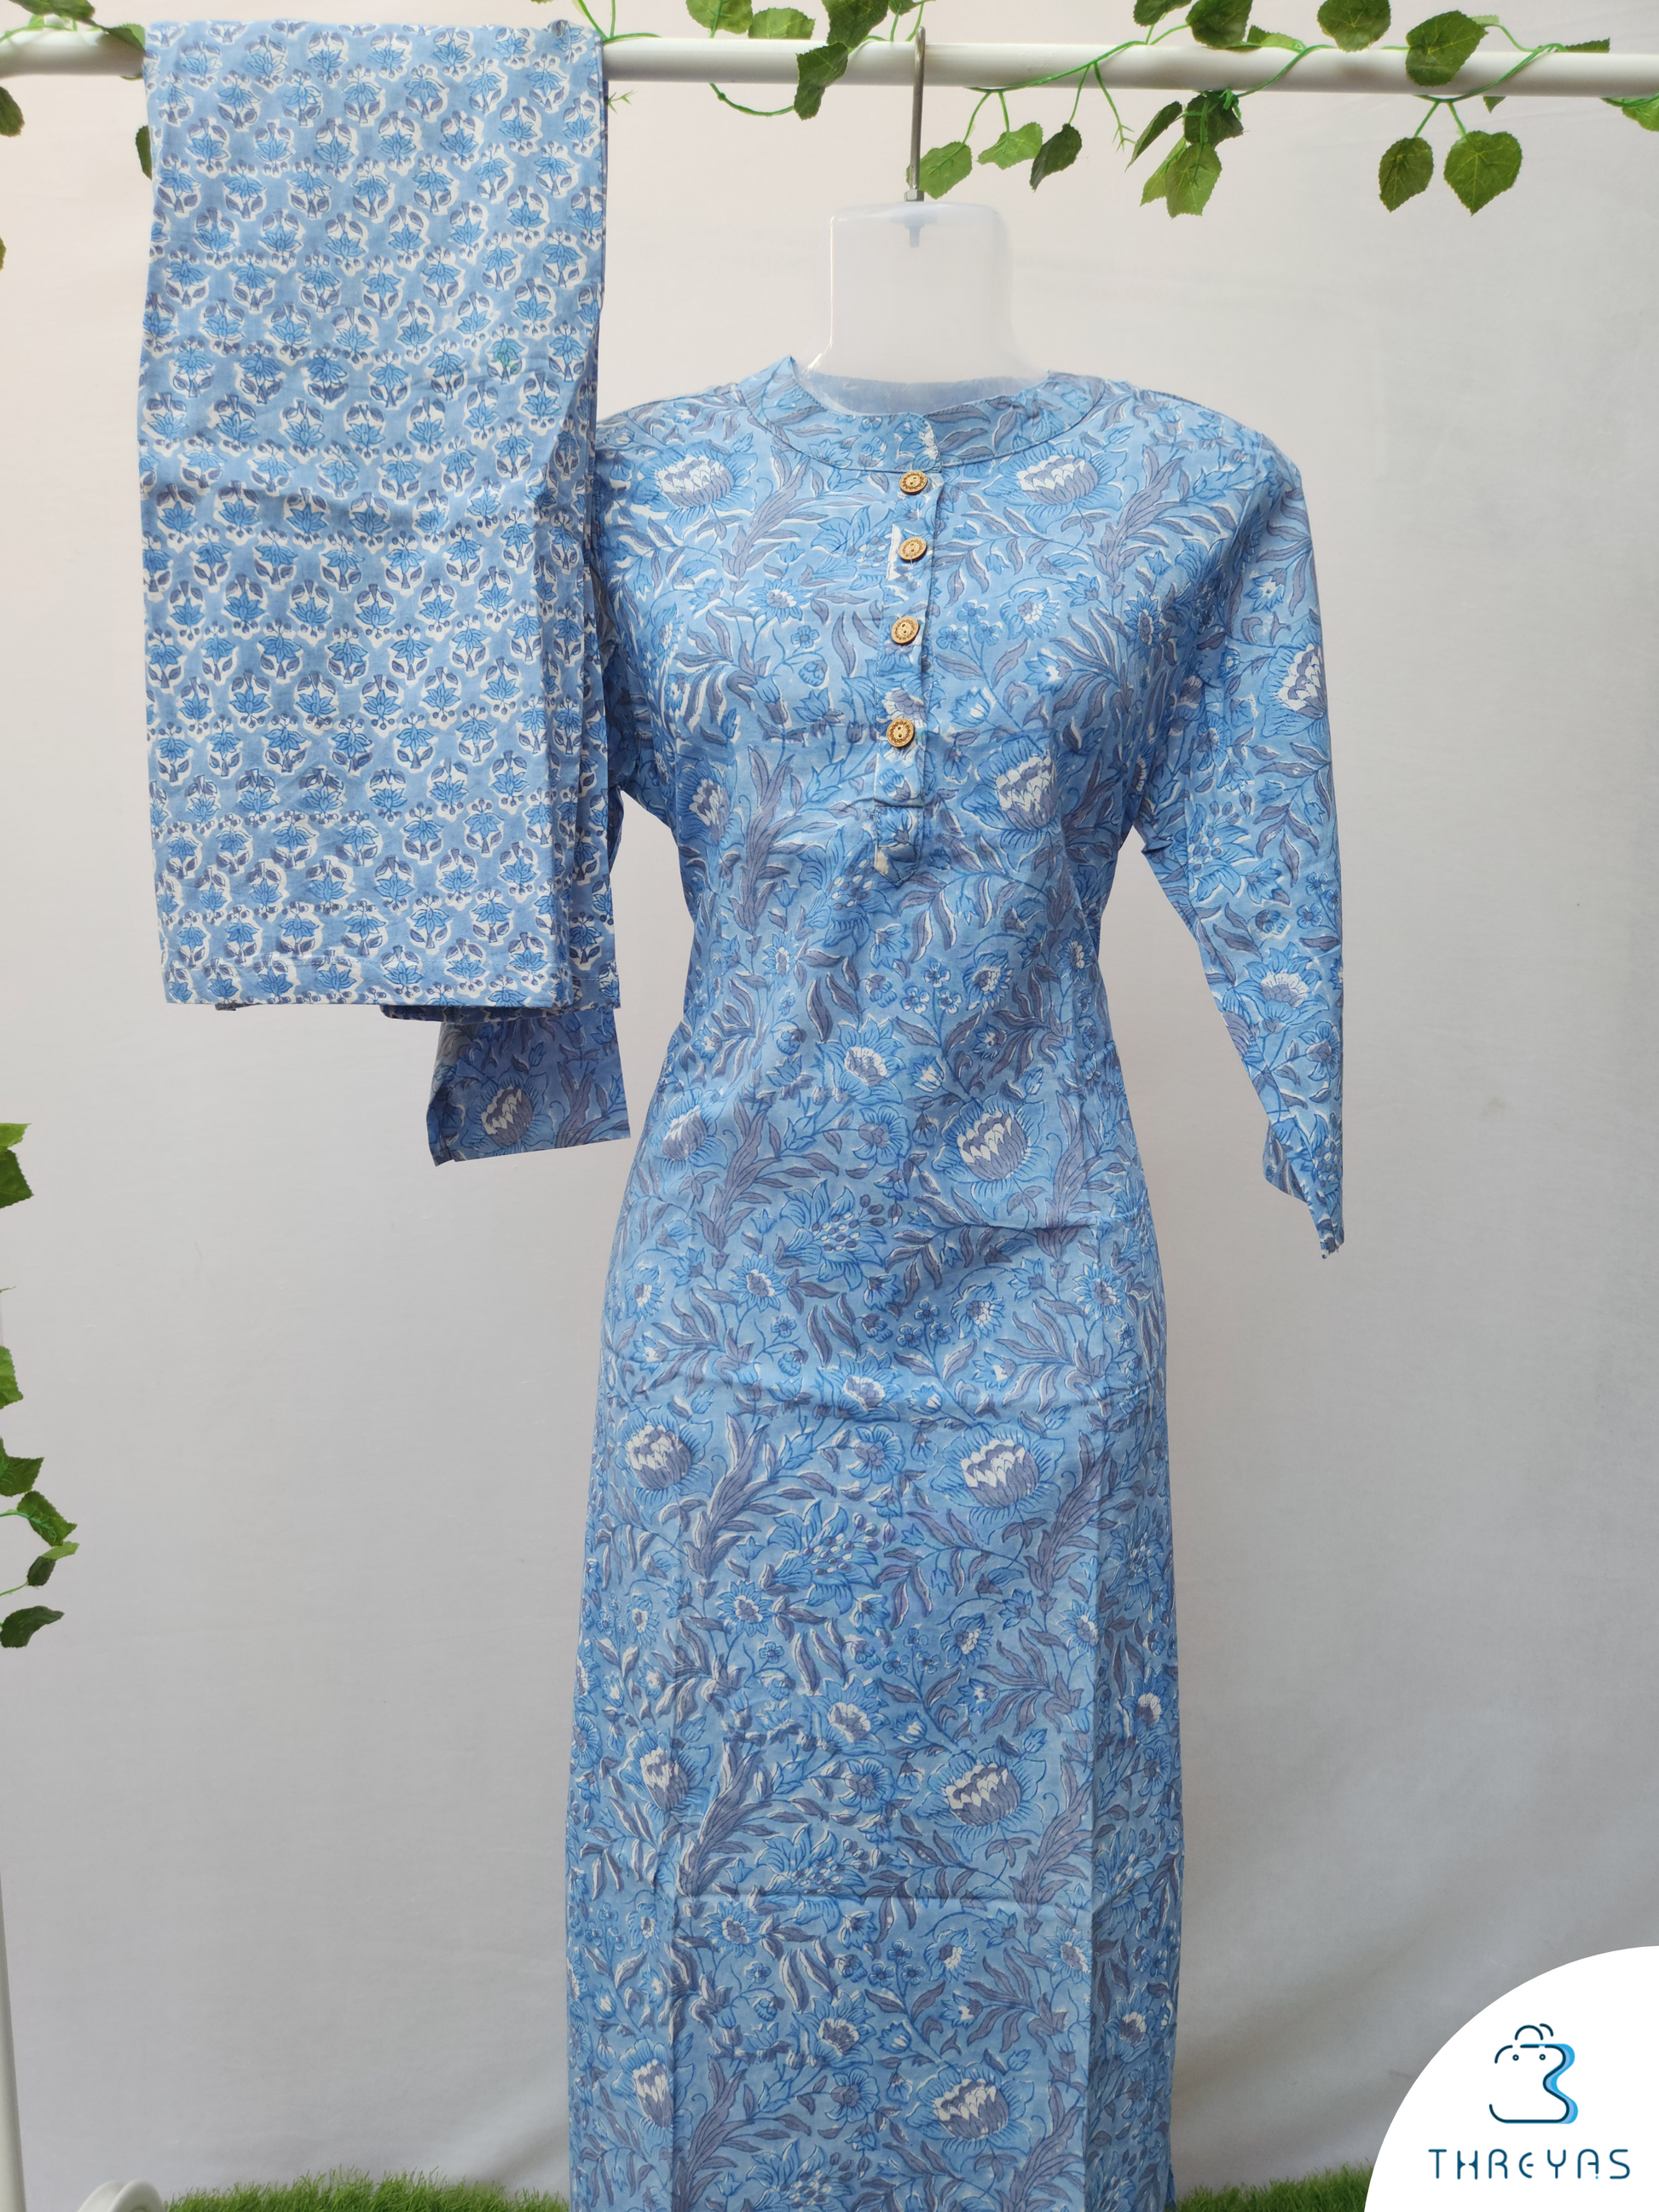 Sky Blue Cotton kurthis Set for women |Stylish Kurthis & Kurtis Sets for Women |Threyas 